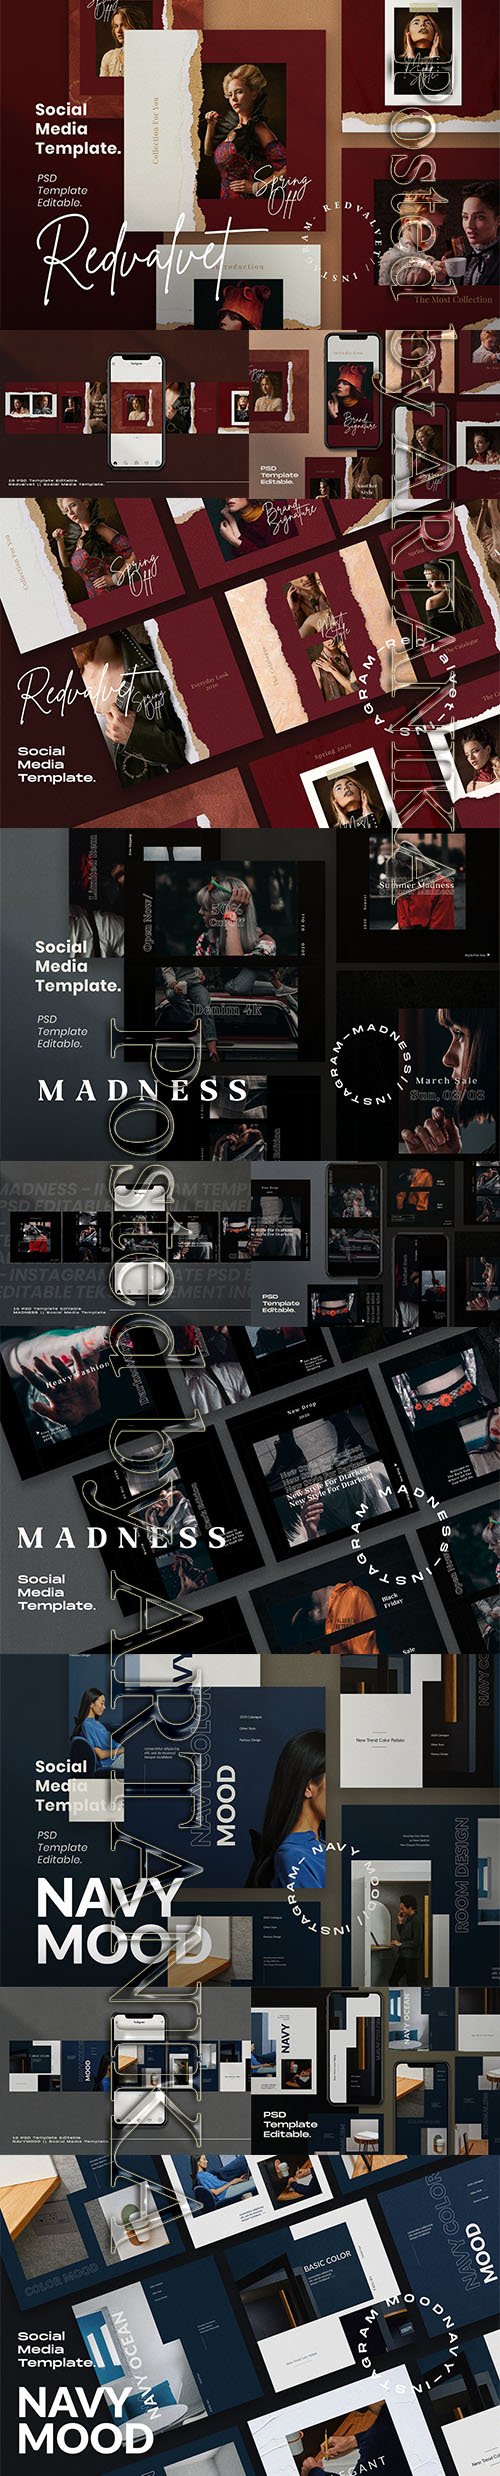 Madness, Redvalvet and Navy Mood - Social Media Template + Instastories